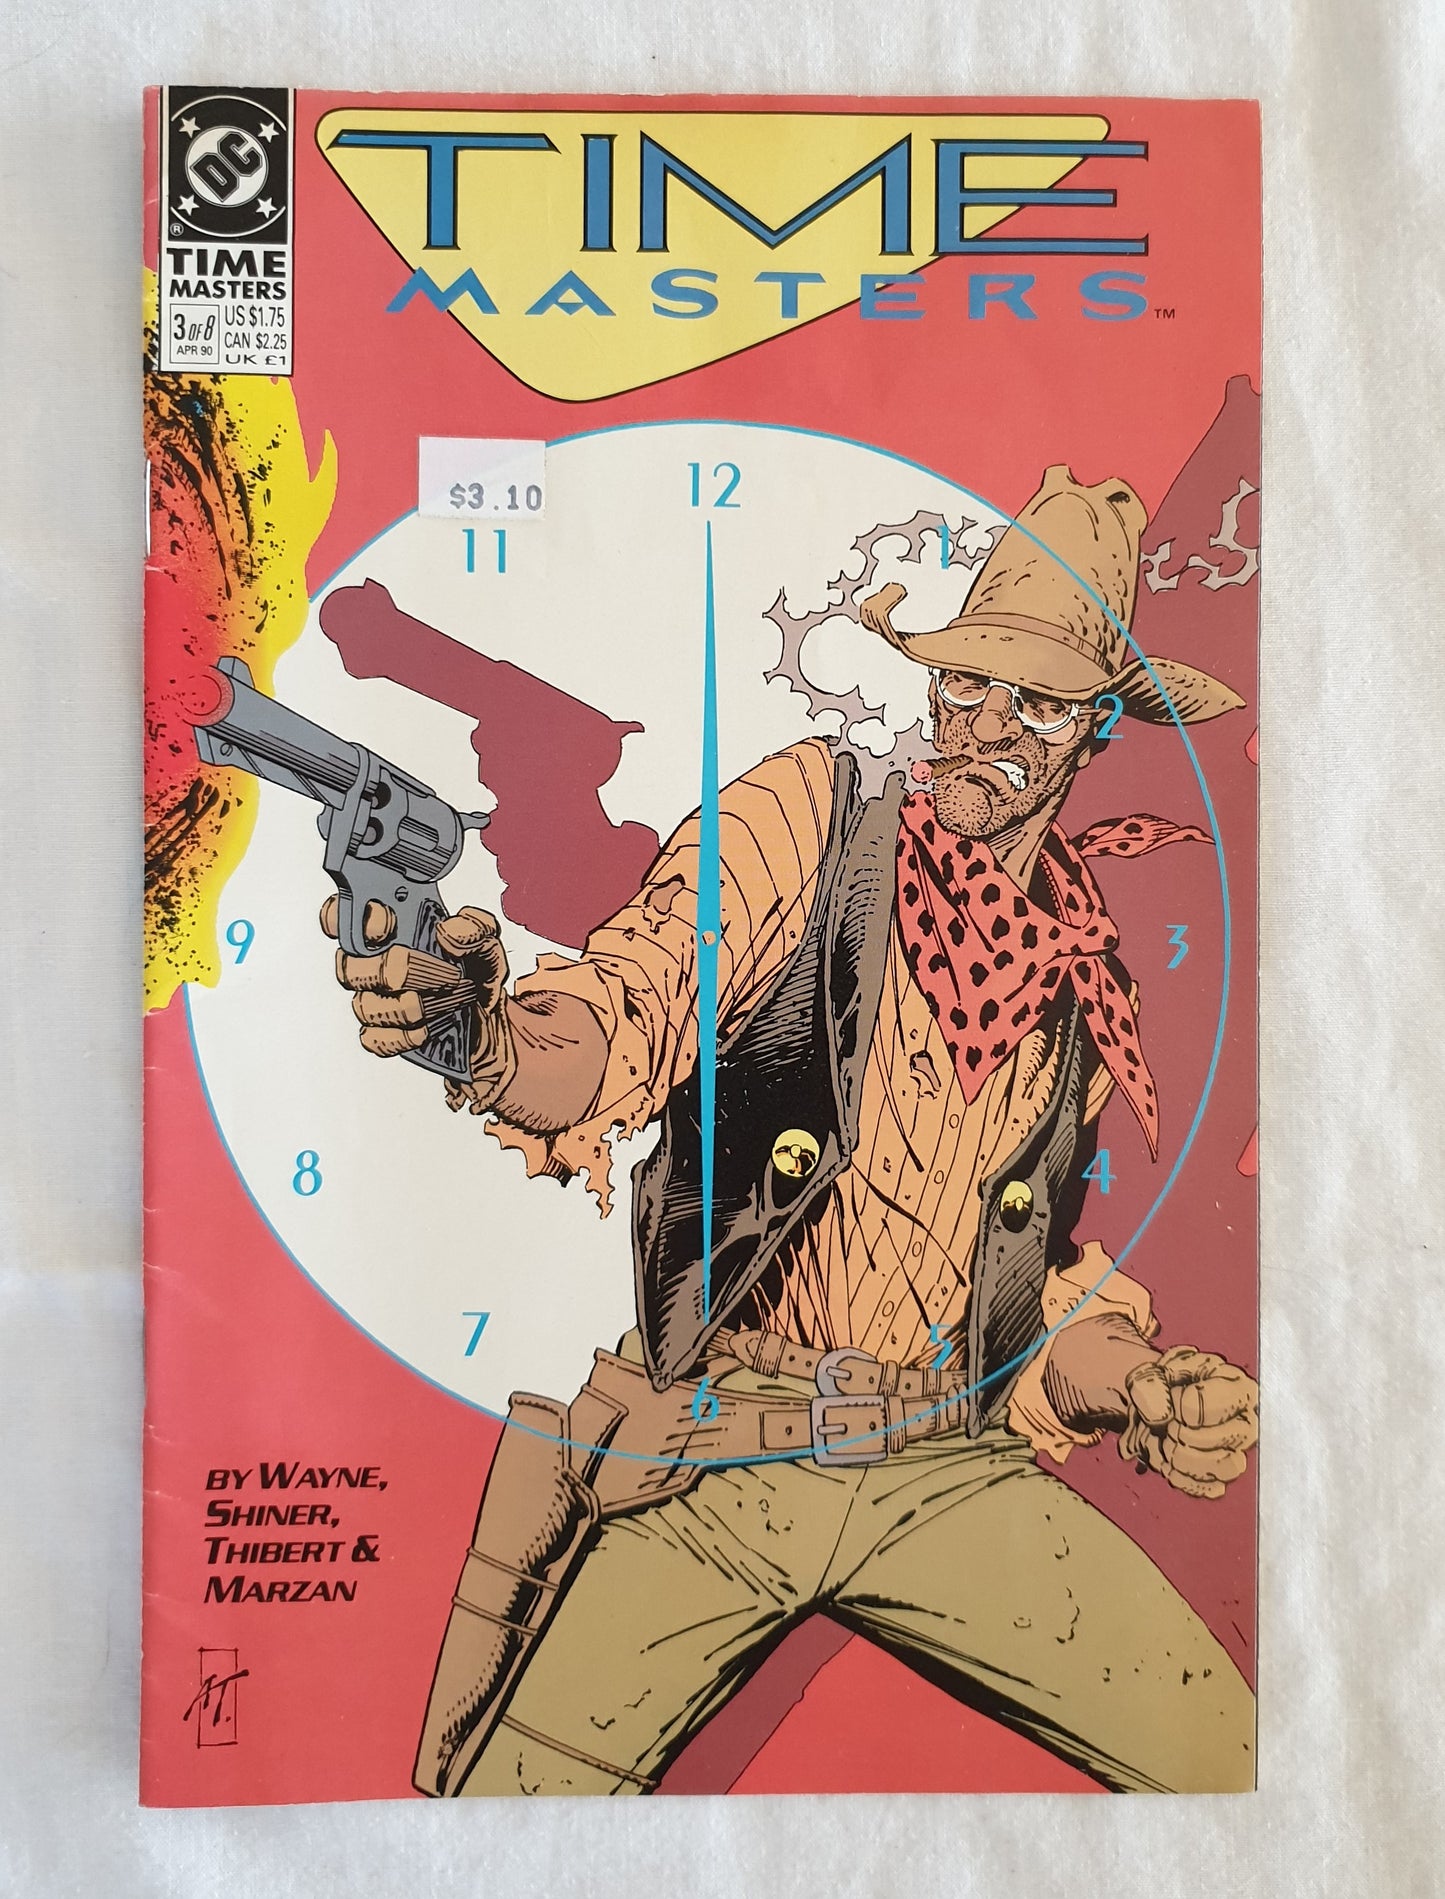 Time Masters (3 of 8) by Wayne, Shiner, Thibert and Marzan - DC Comics